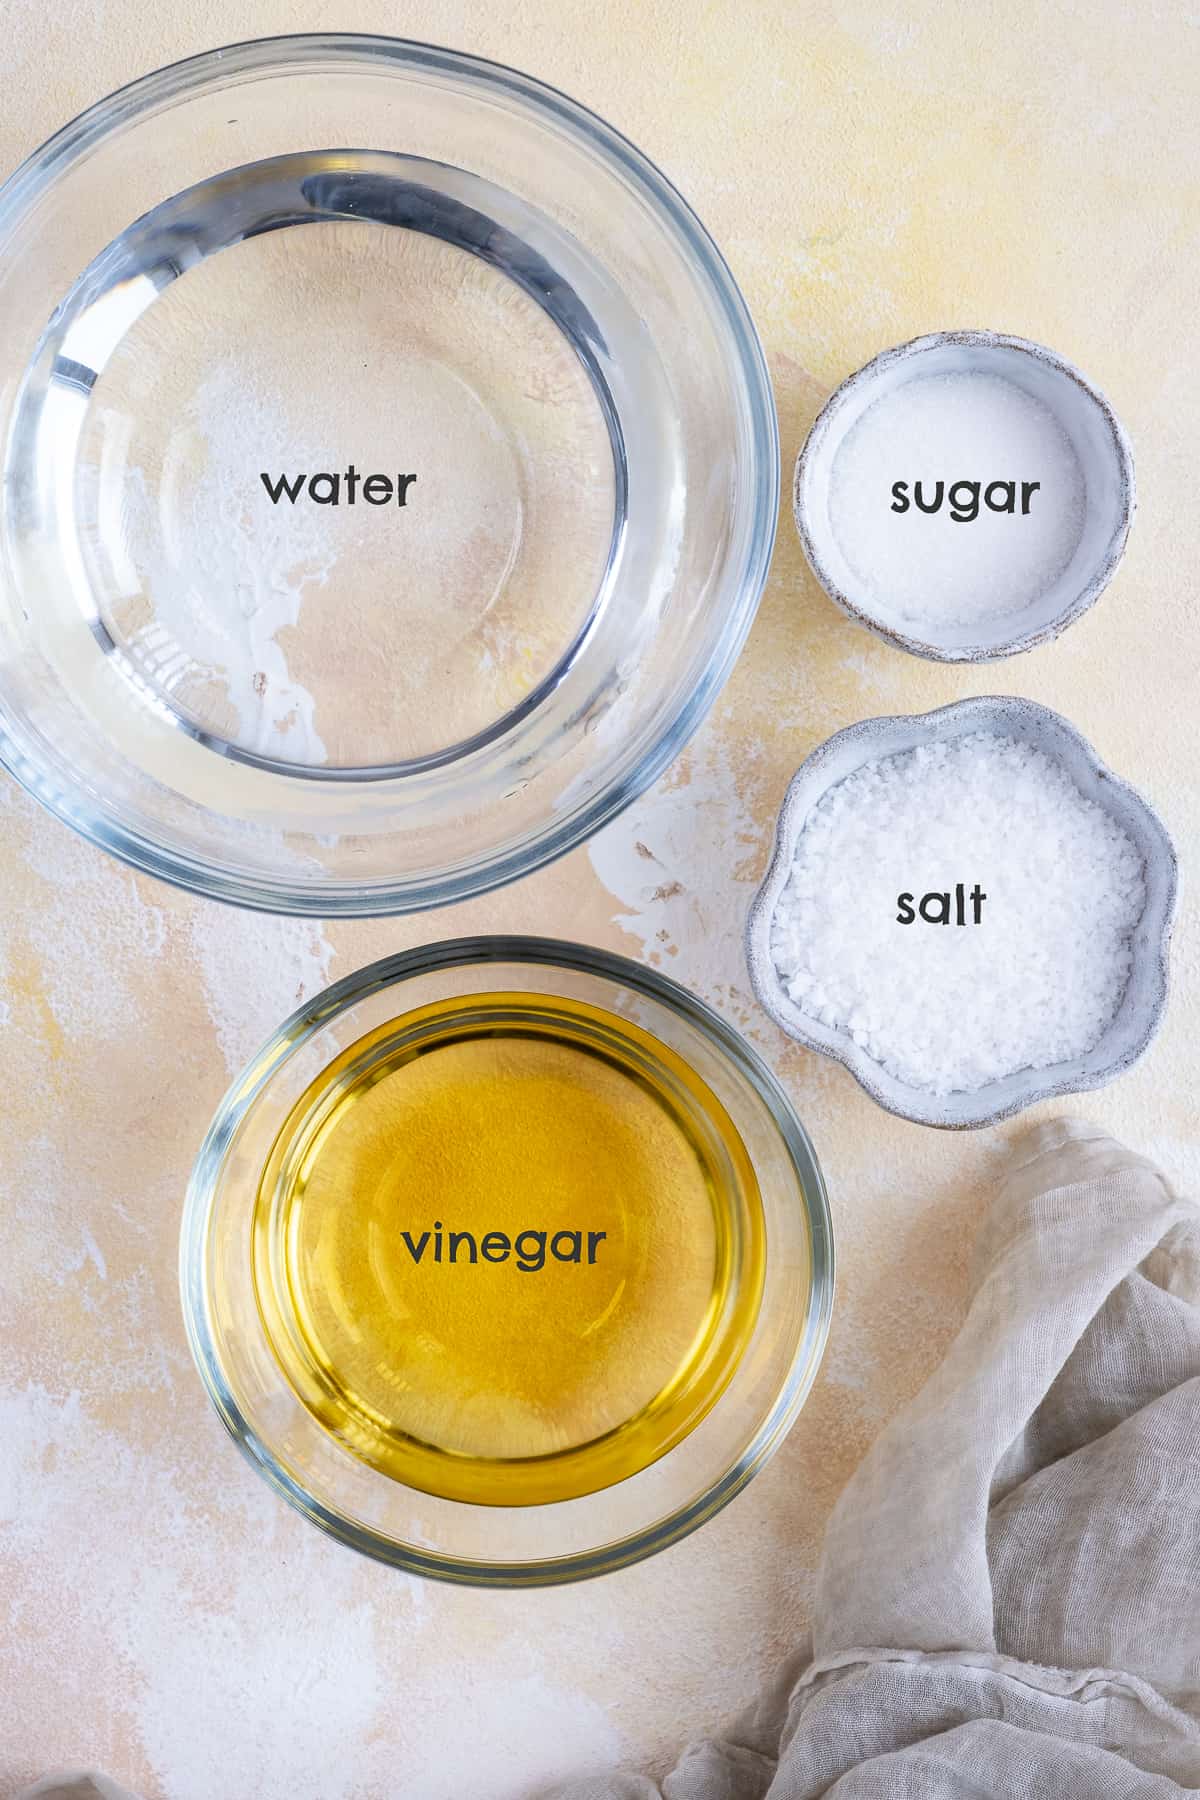 Vinegar, water, salt and sugar in bowls.